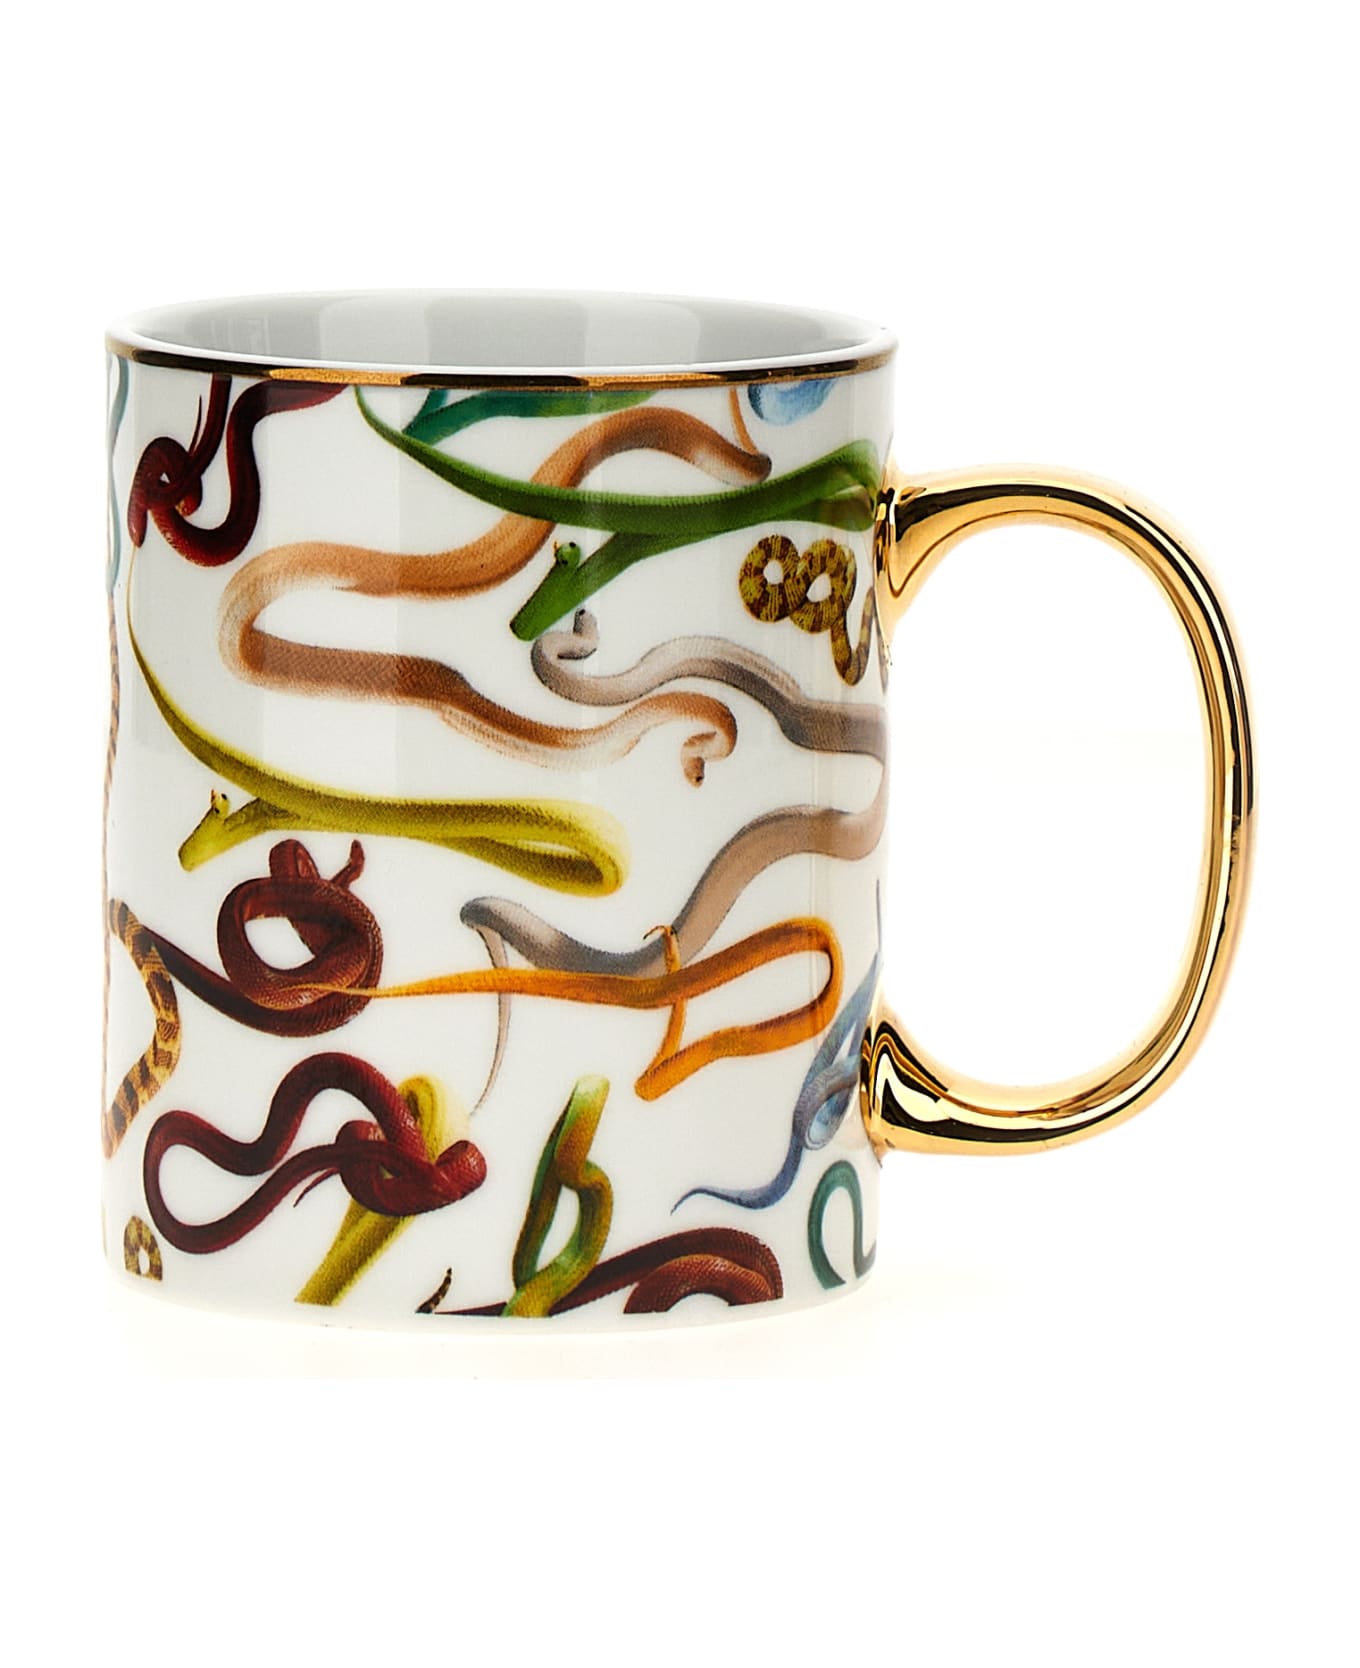 Seletti X Toiletpaper 'snakes' Cup - Multicolor グラス